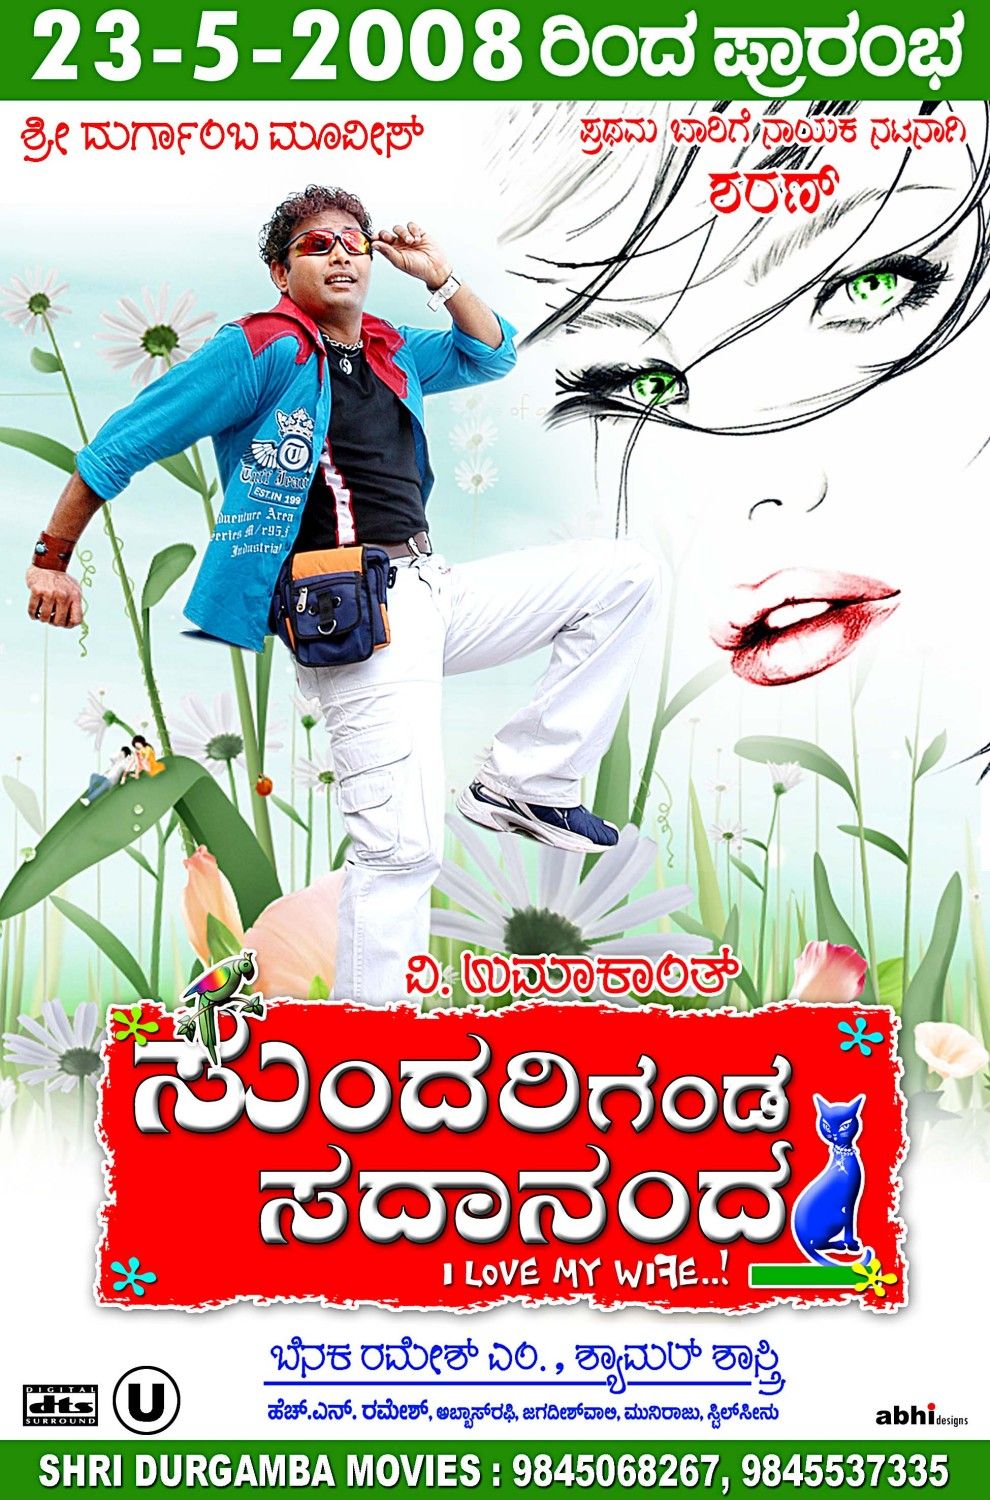 Extra Large Movie Poster Image for Sundari Ganda Sadananda (#4 of 5)